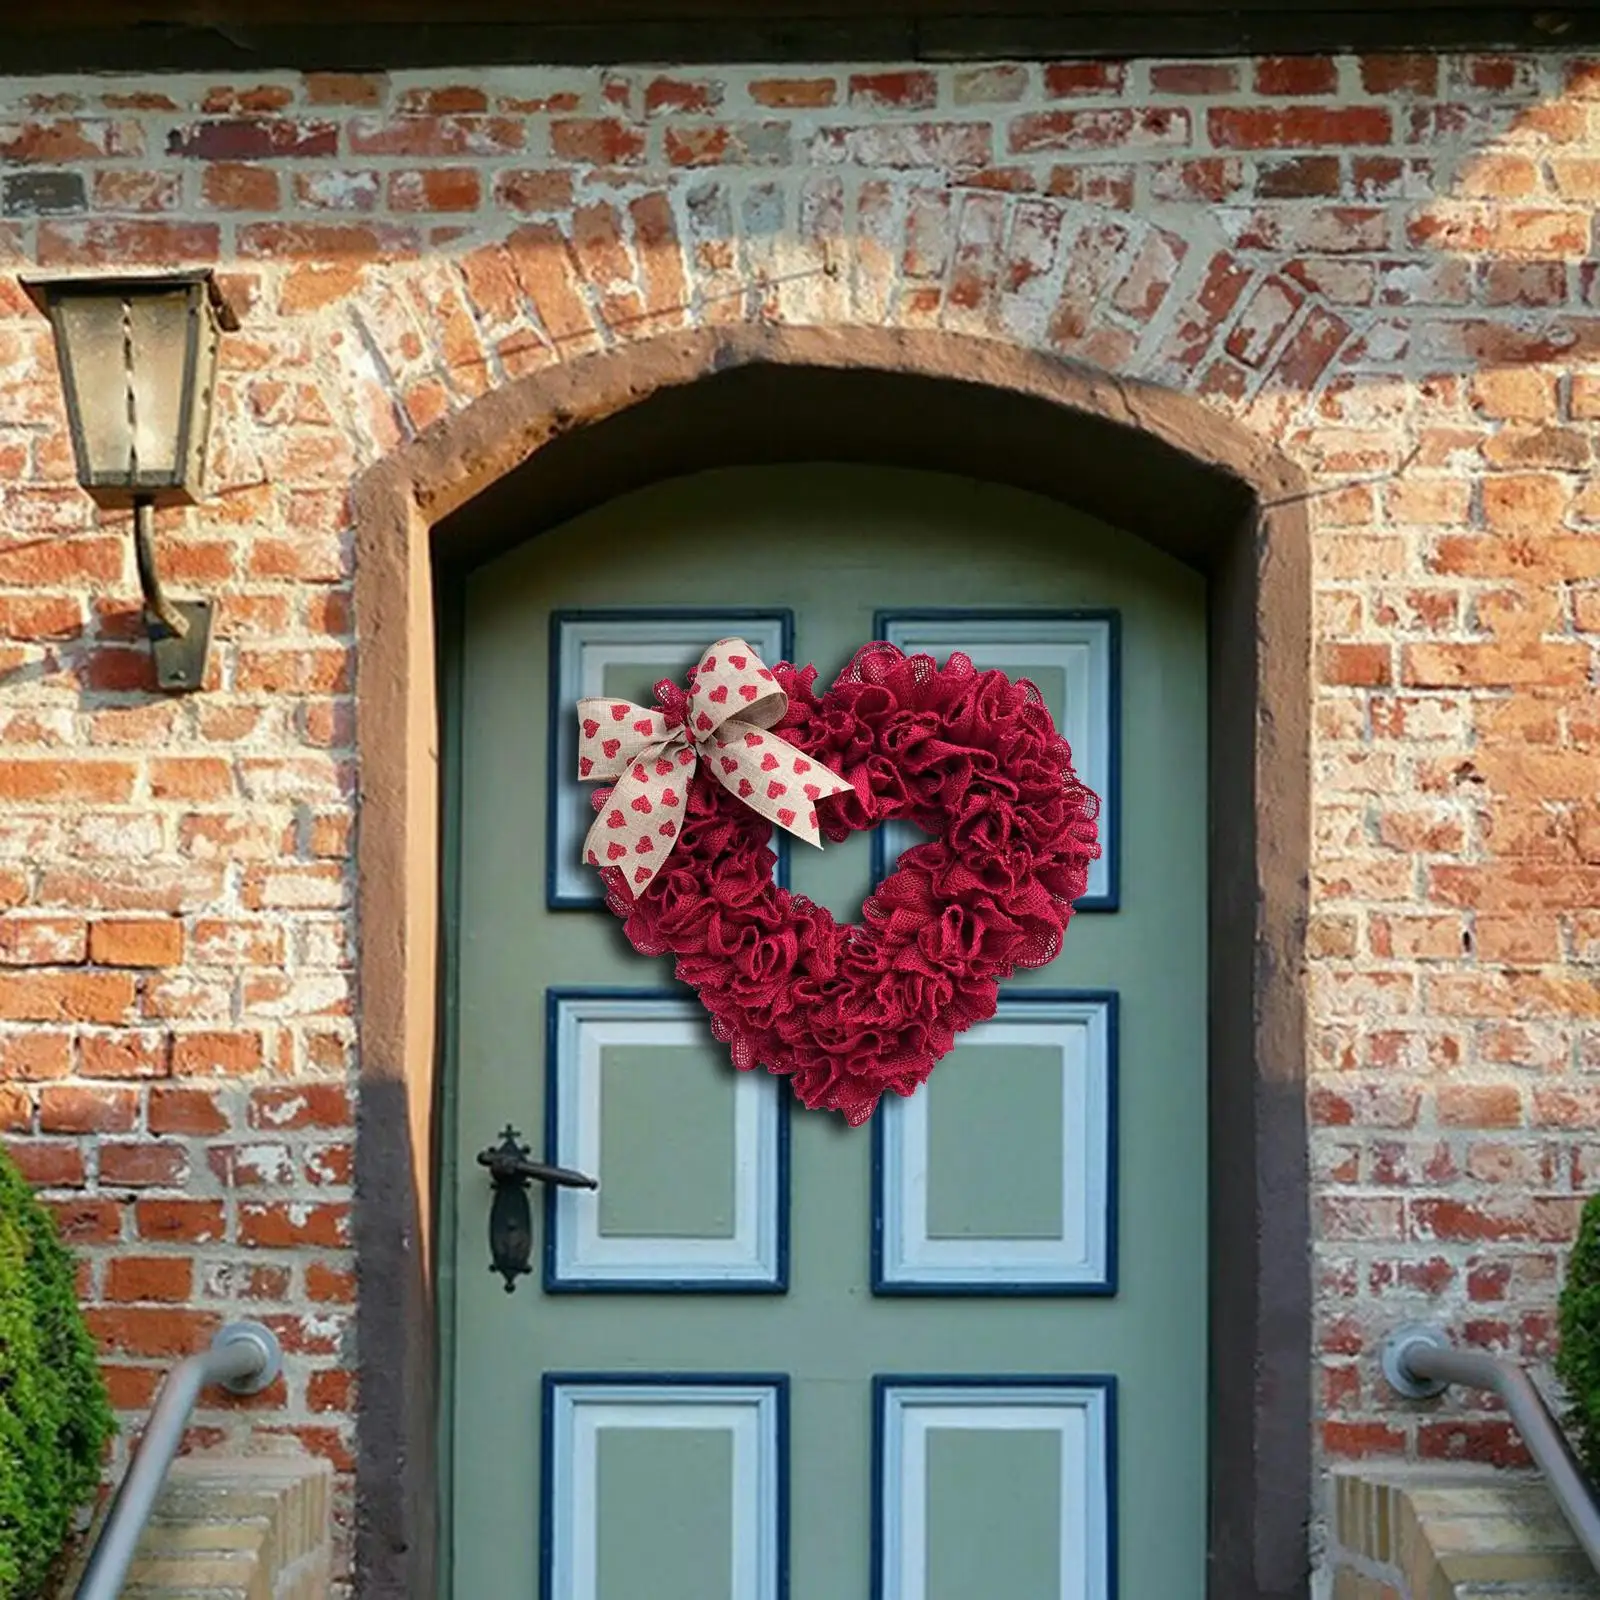 15.75`` Valentines Day Wreath Door Hanging Heart Wreath Ornaments Pendant Garland for Wedding Garden Porch Decor Party Supplies